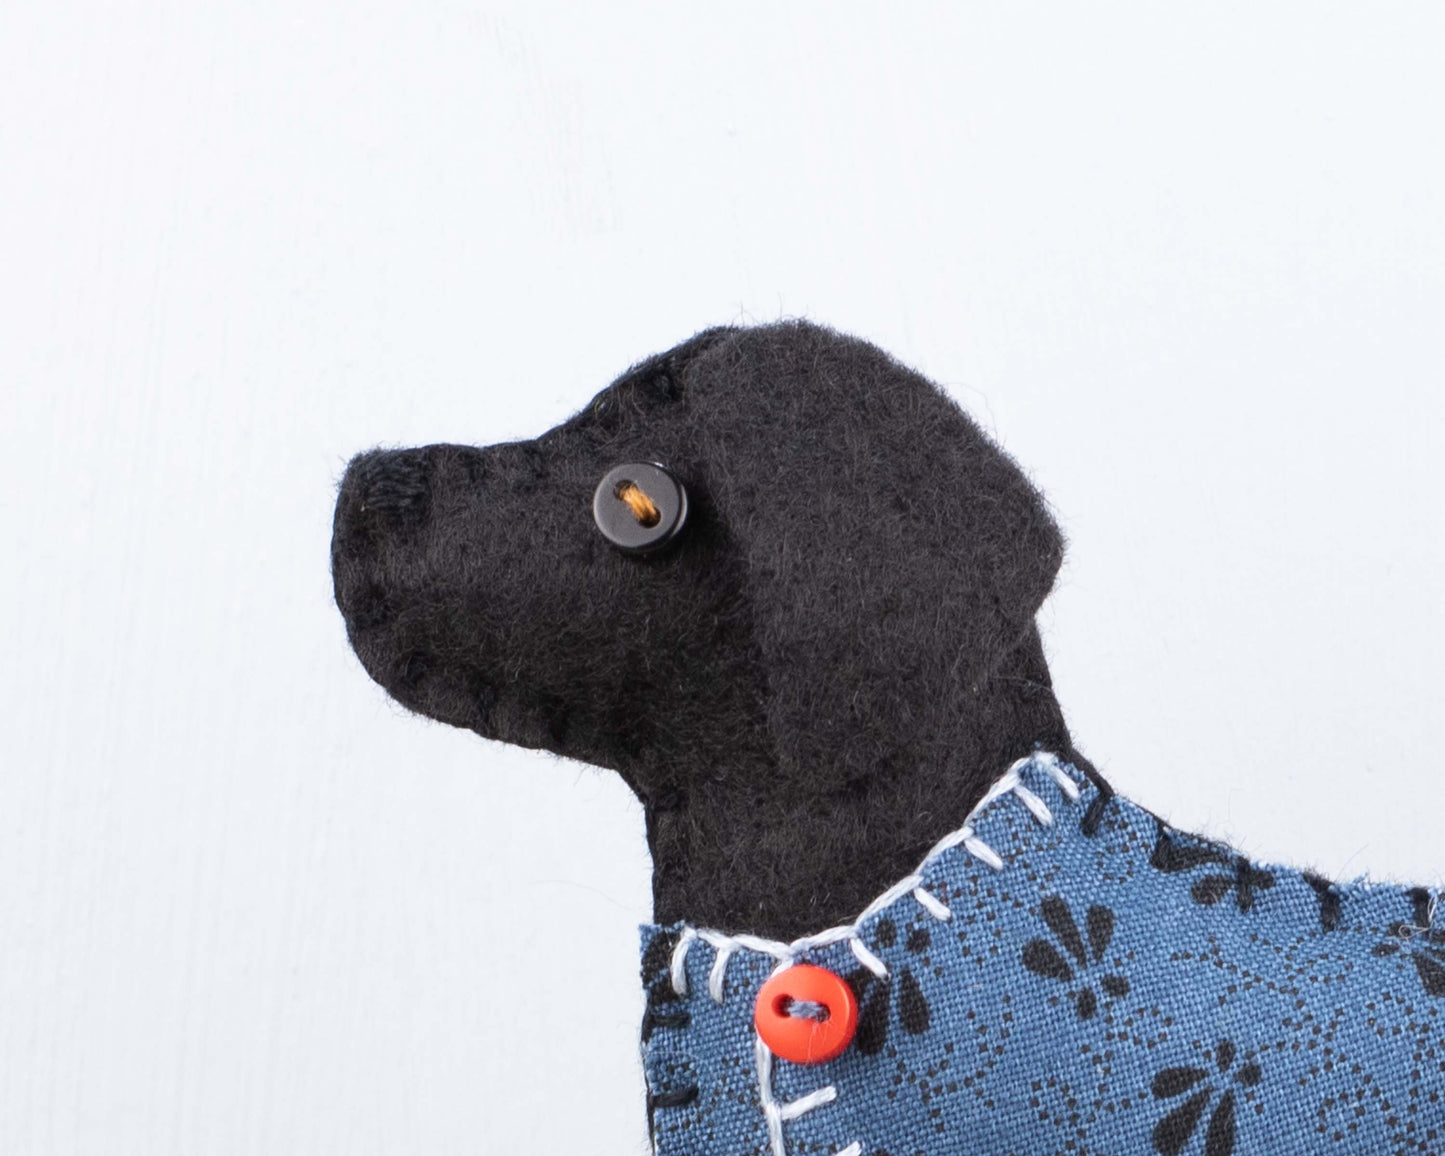 Bertie the Black Labrador Felt Ornament